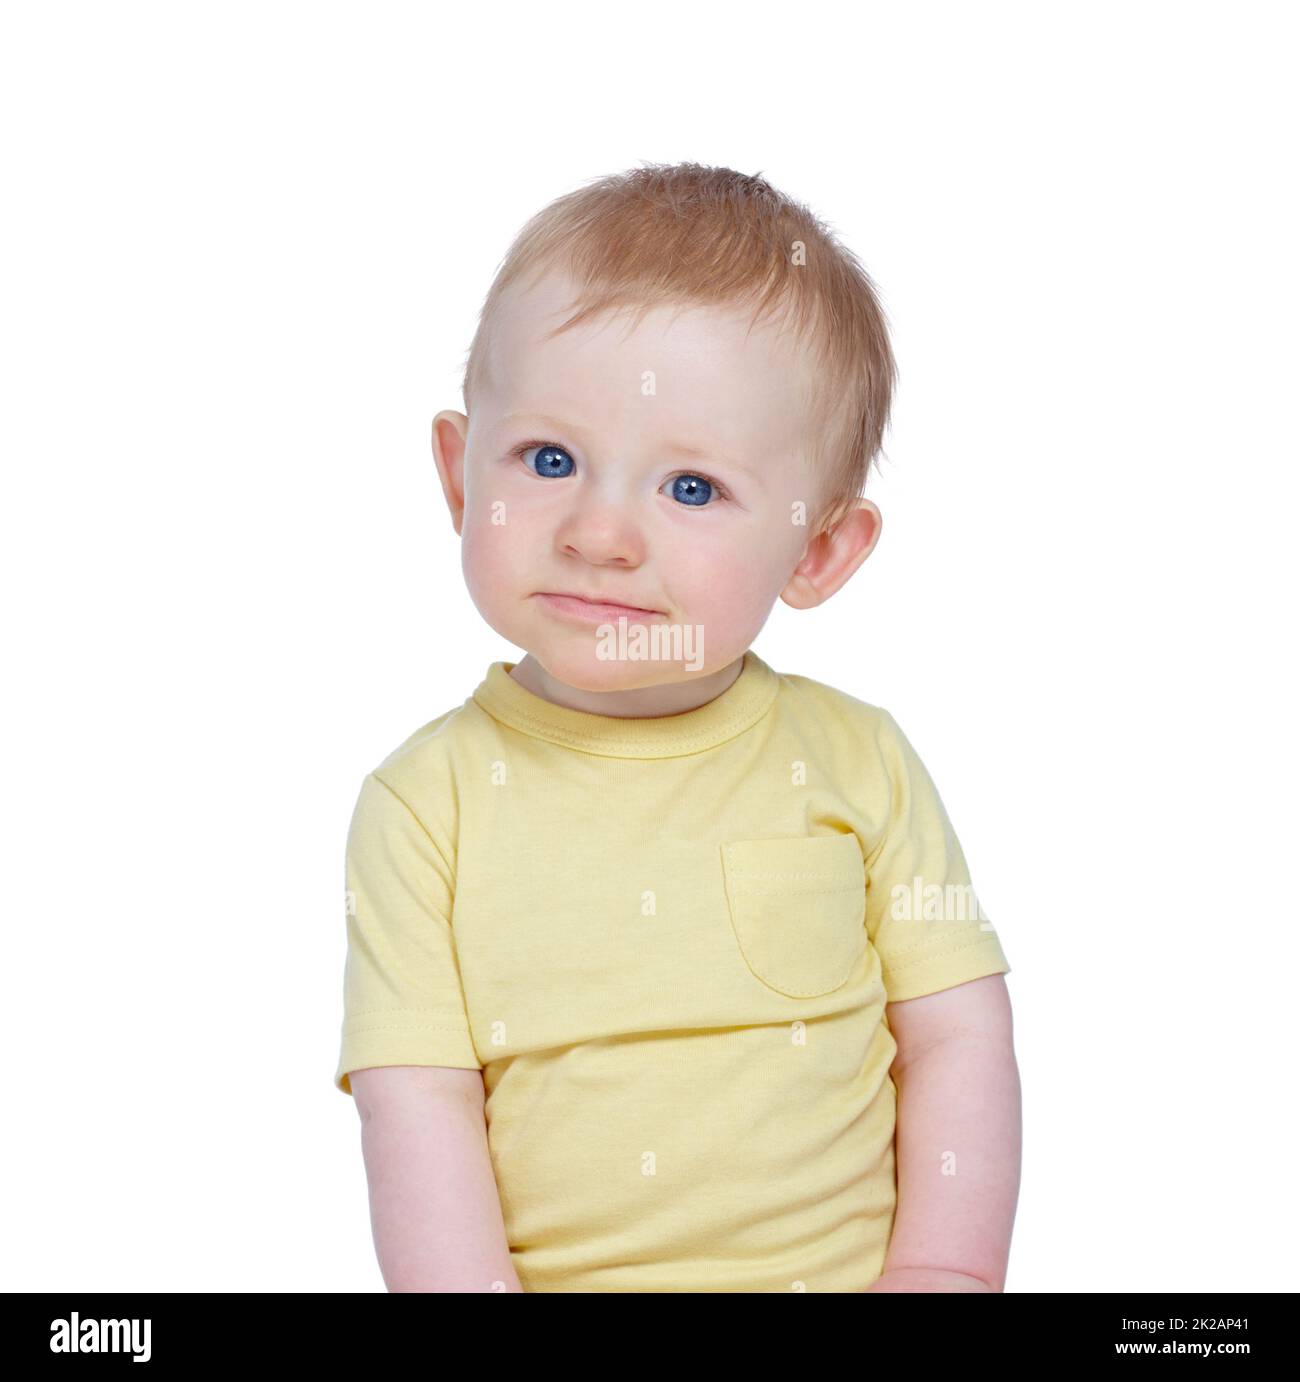 Curious kid. Studio shot of a cute baby boy in a yellow shirt. Stock Photo